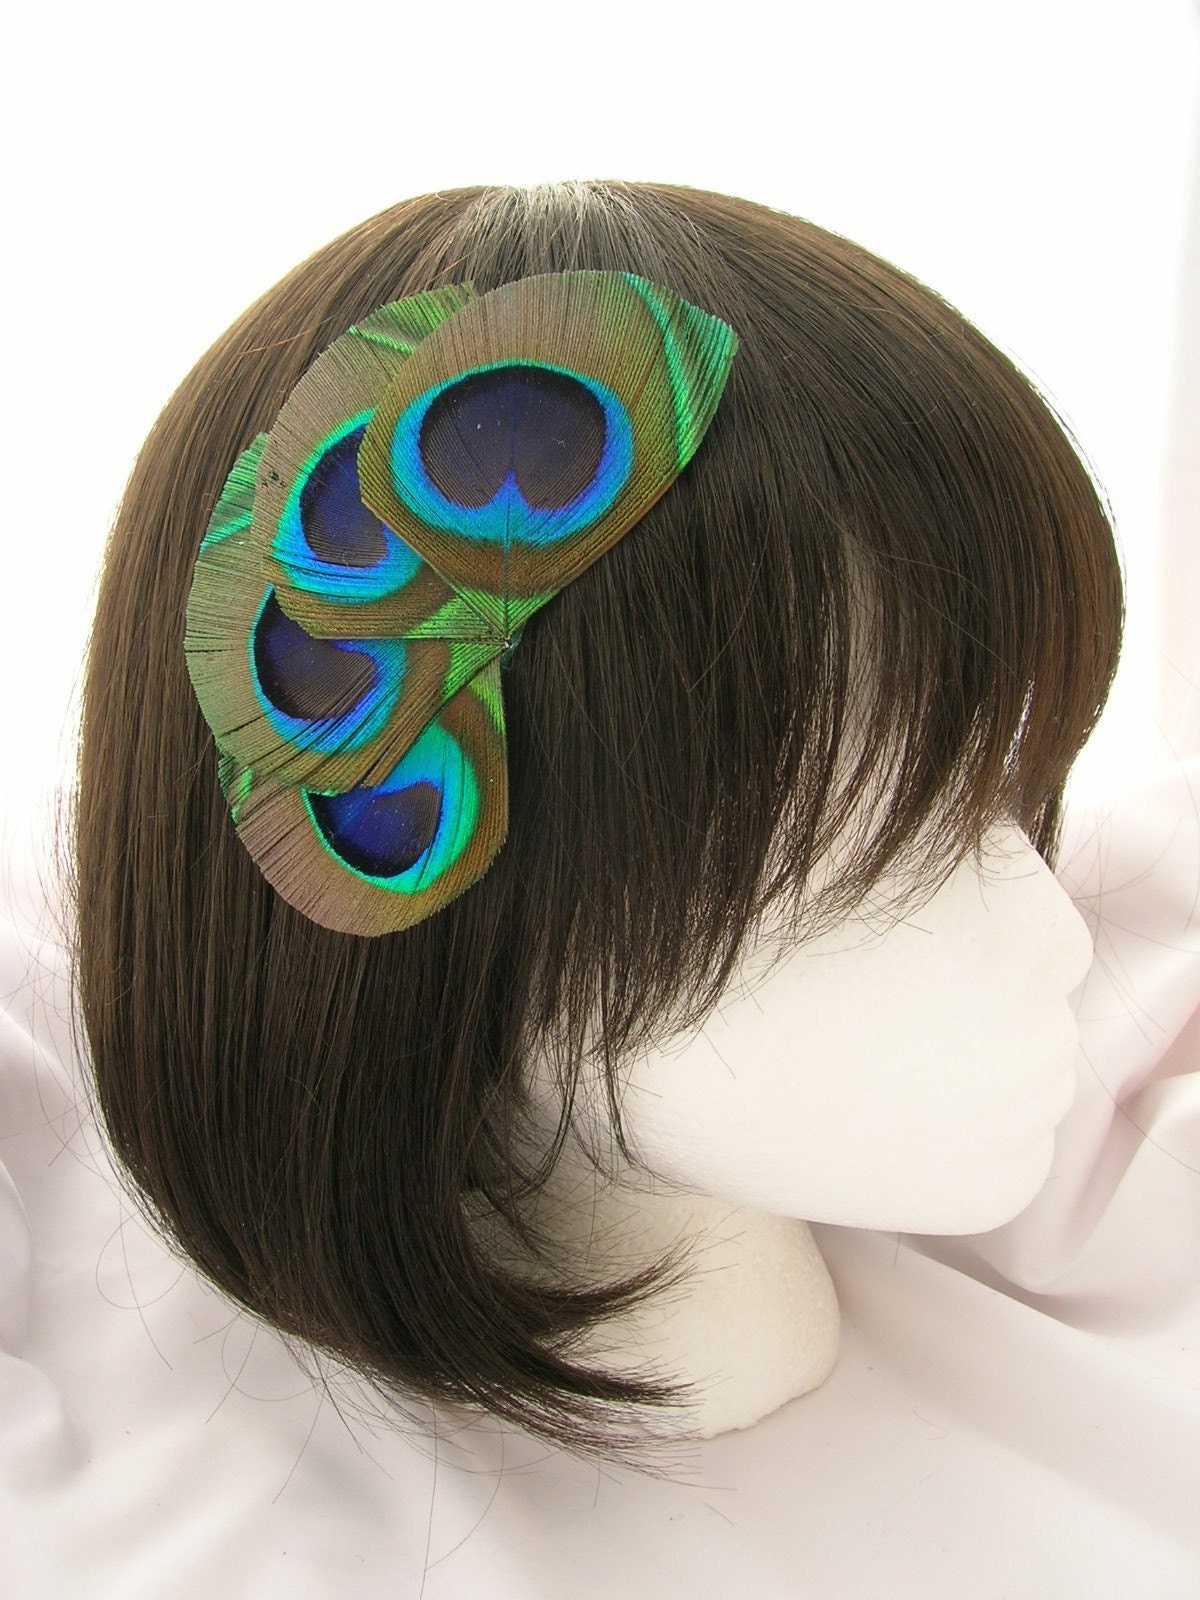 Hera Design peacock eyes feather fascinator - fan style headdress - headband, hair clip, elastic band, or comb your choice